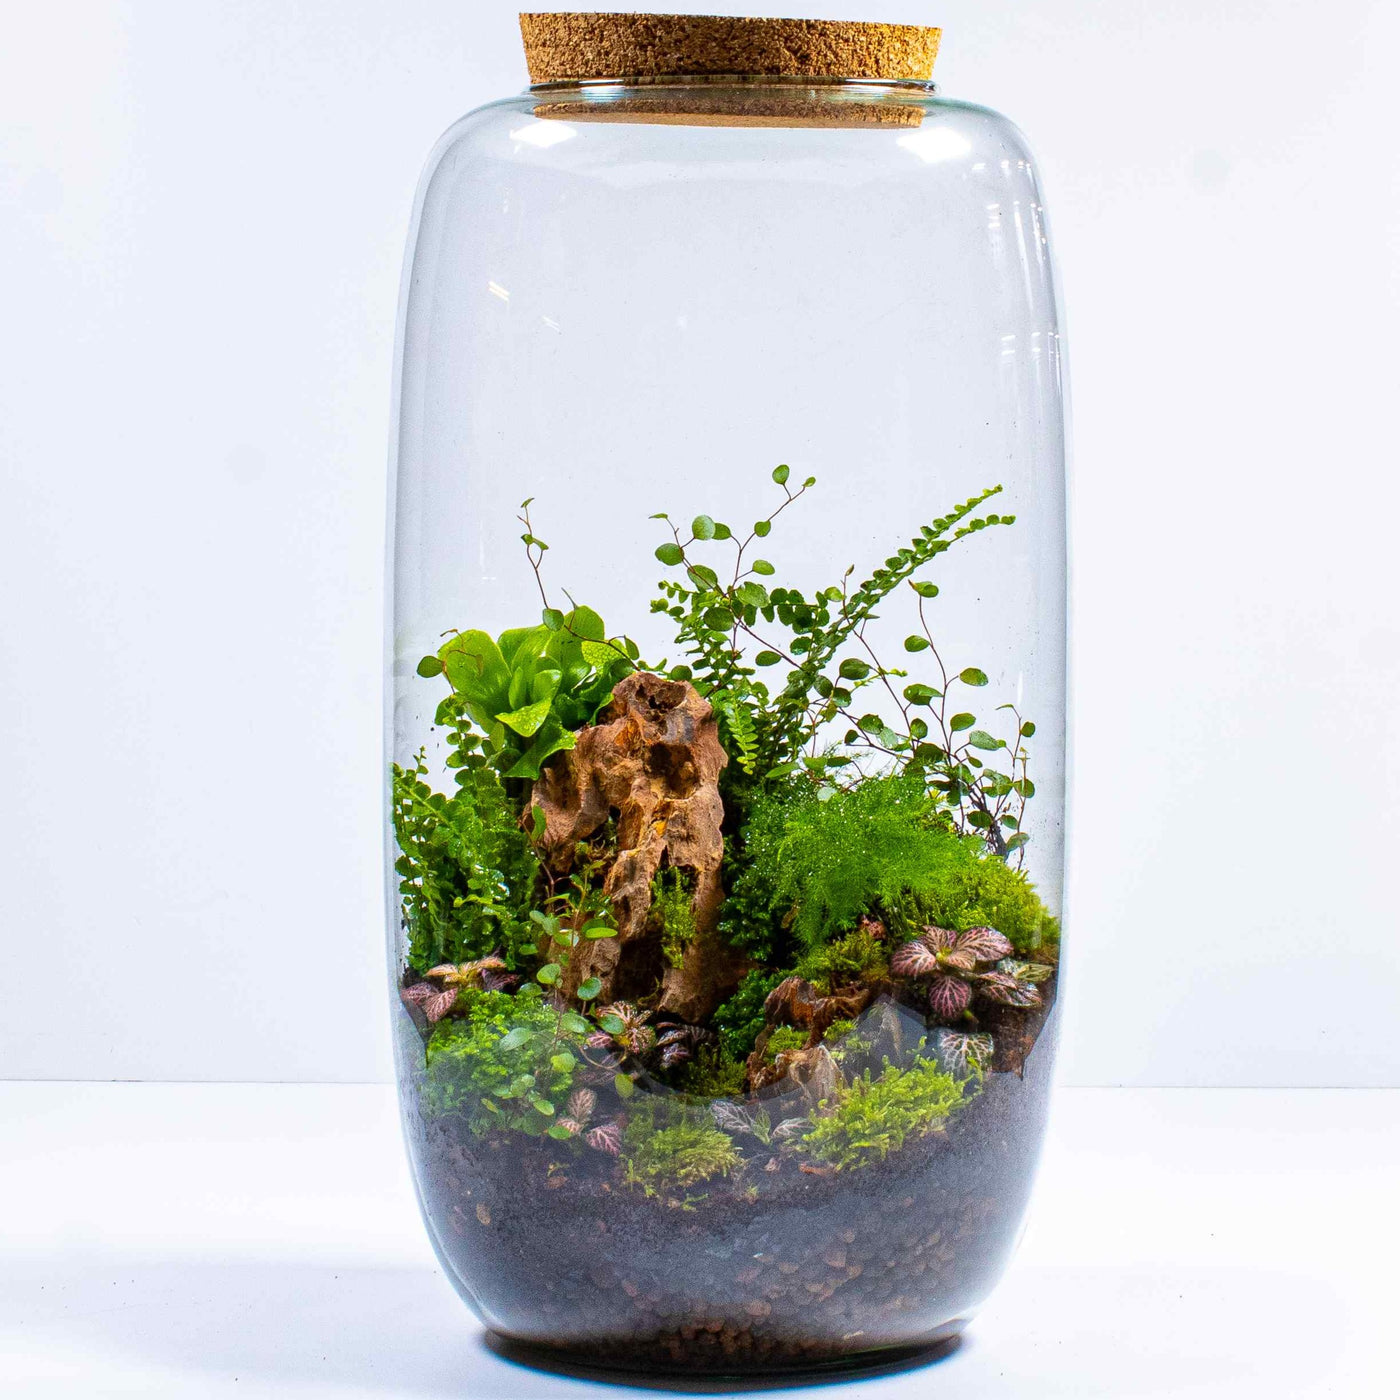 Large terrarium glass: Ideal for showcasing vibrant plant life.